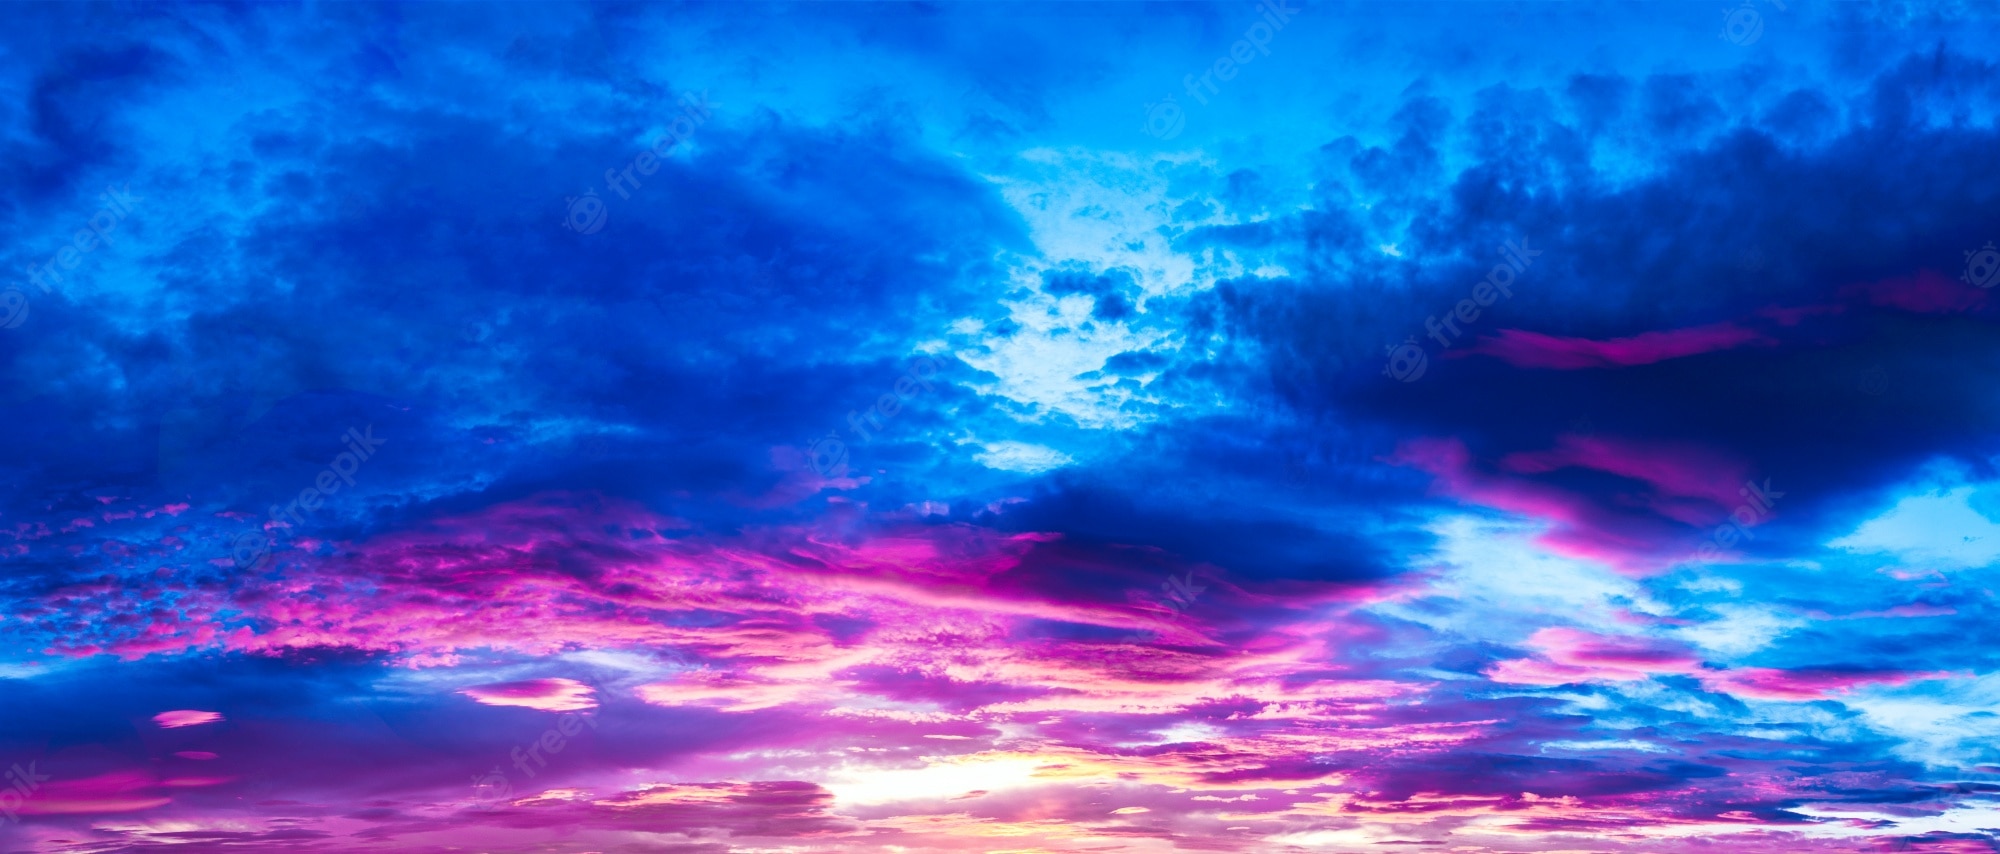 Purple Clouds Image. Free Vectors, & PSD